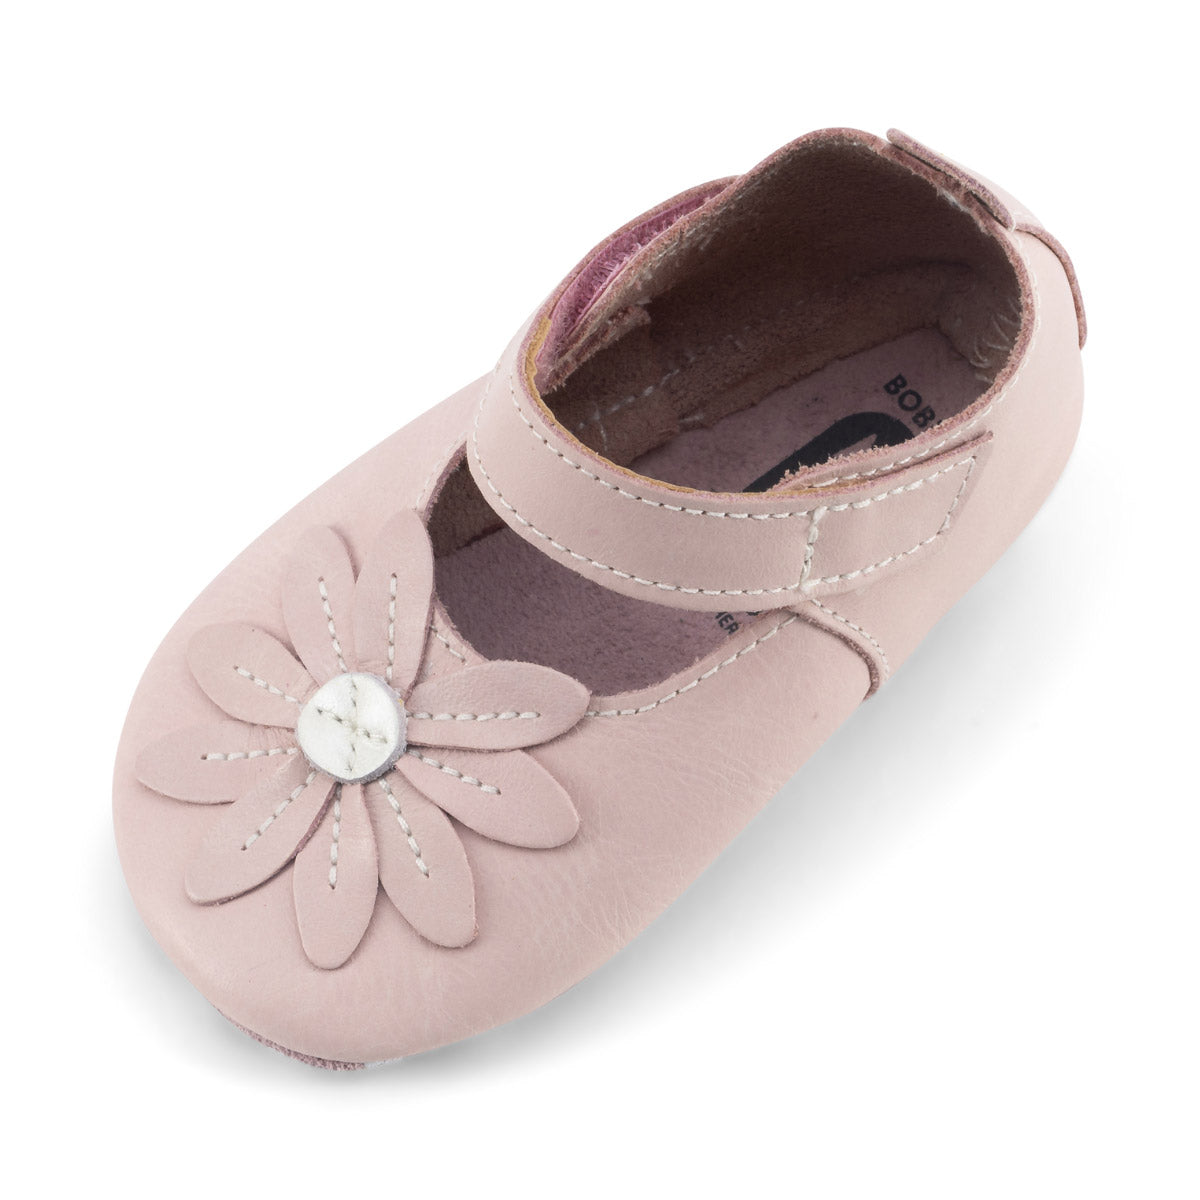 Bobux Daisy Jane Soft Sole Shoe Top_2_Blossom